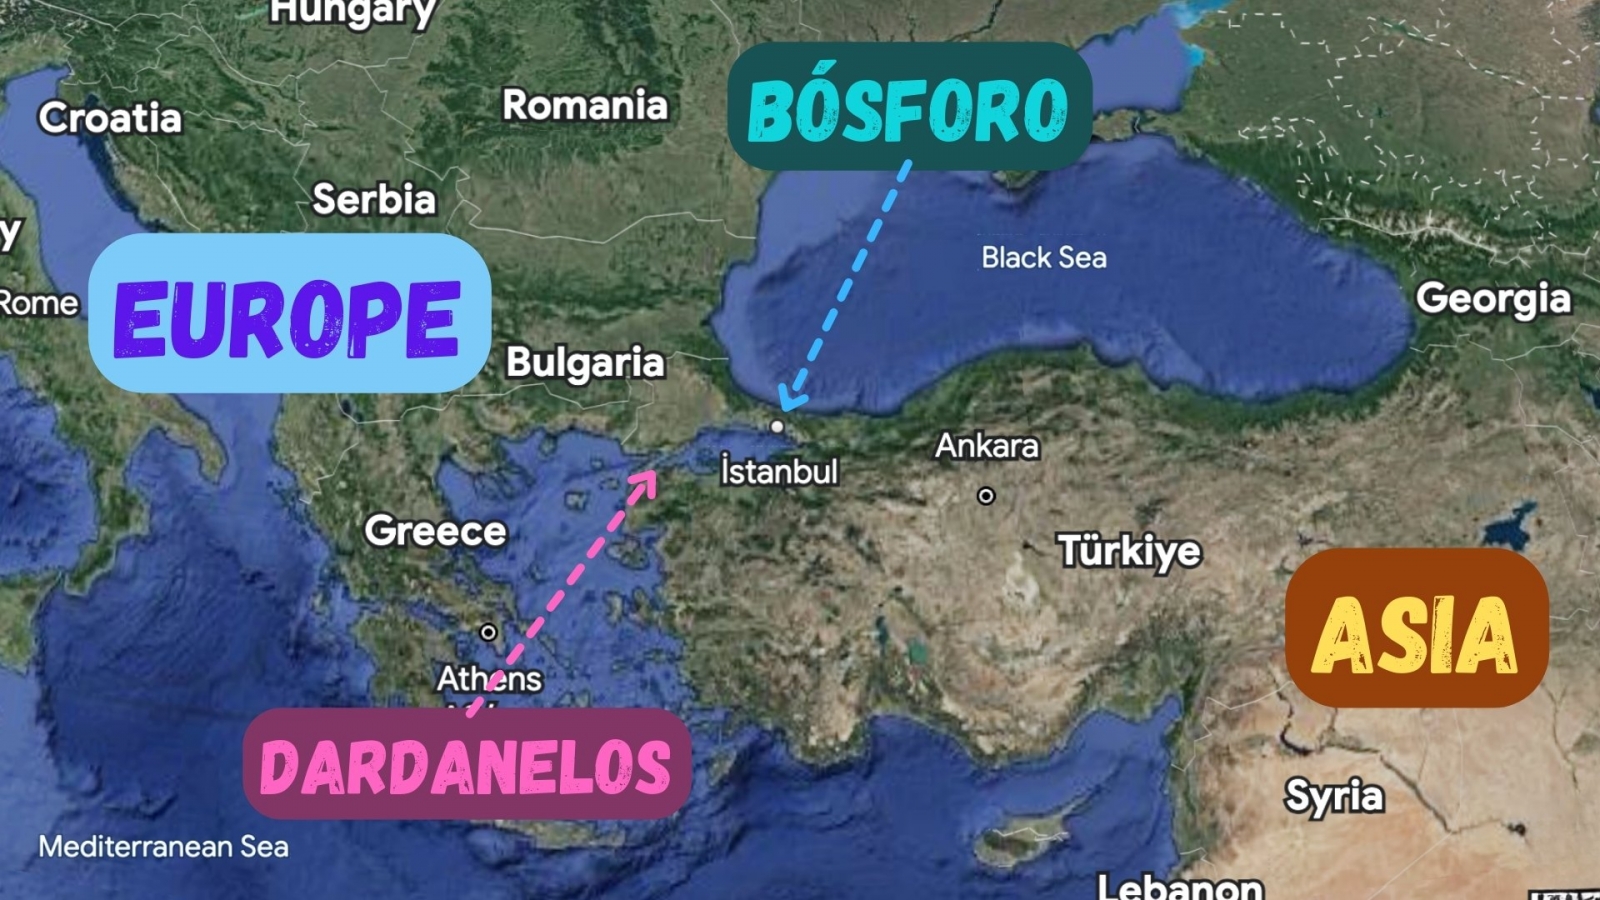 Europa-Bósforo-Asia mapa